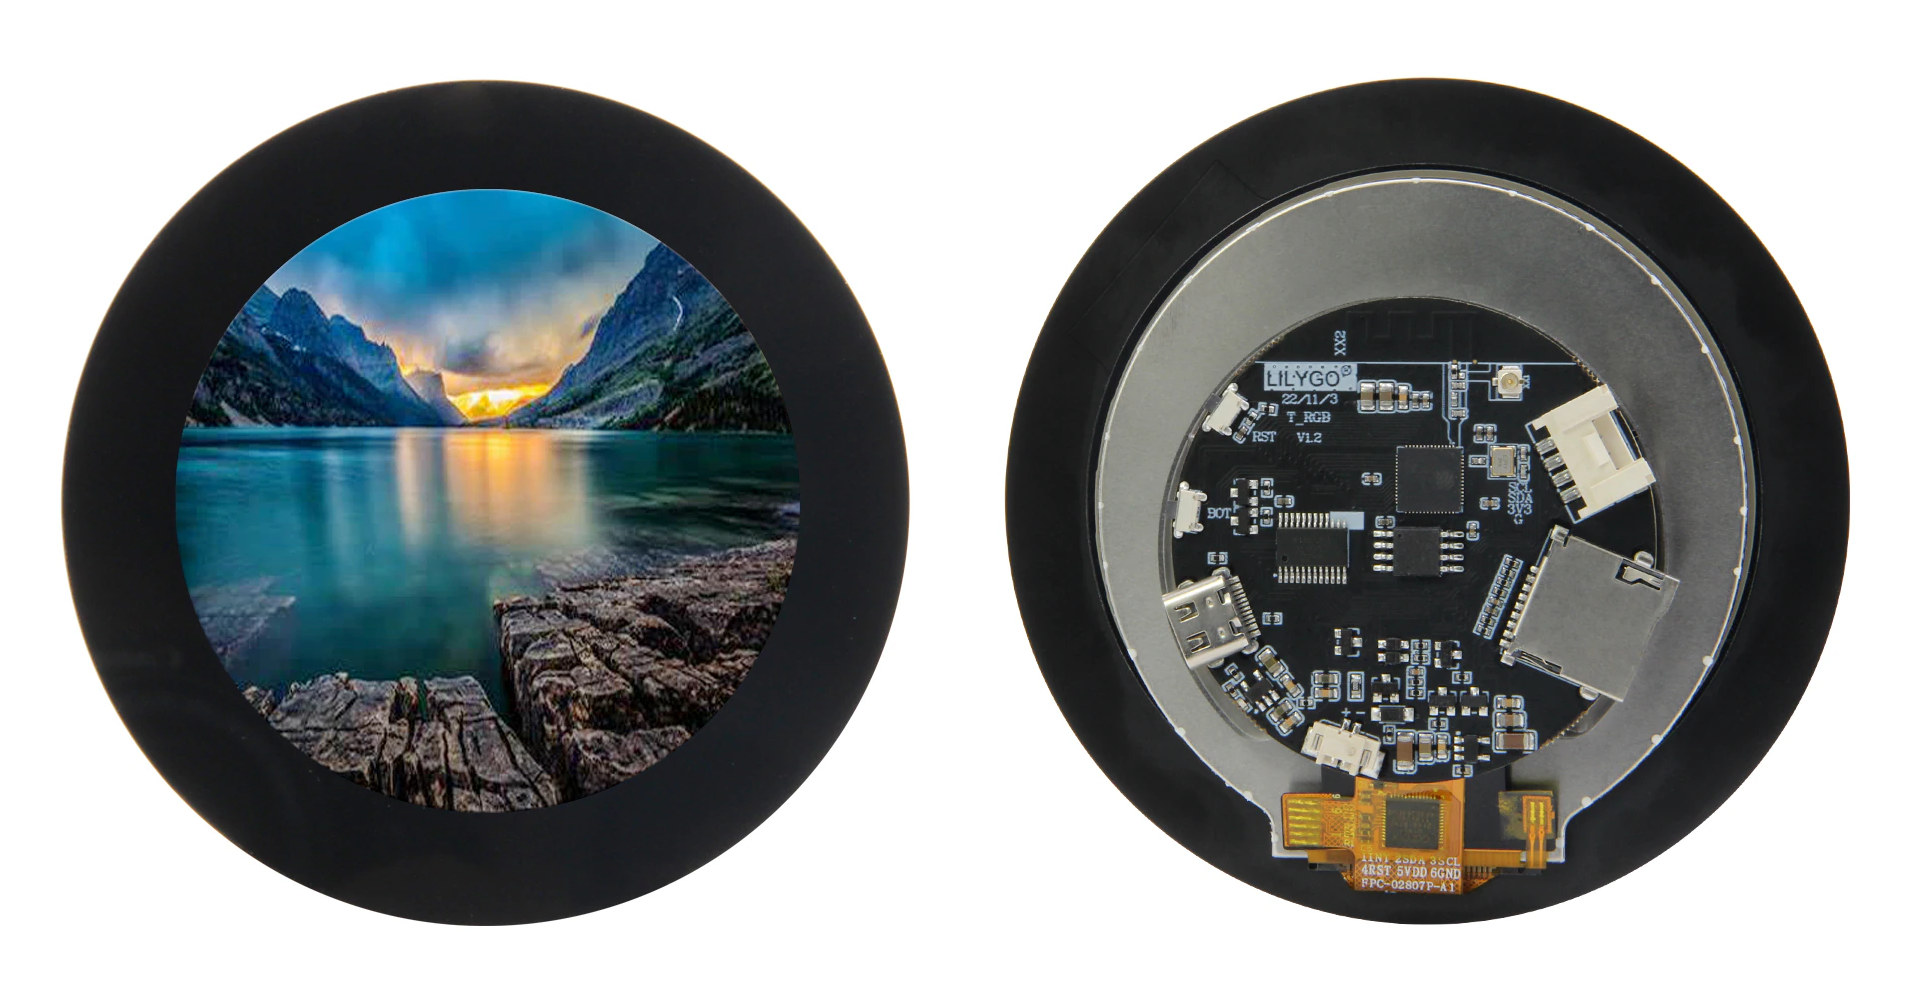 T RGB ESP32 S3 board 2.8 inch round display